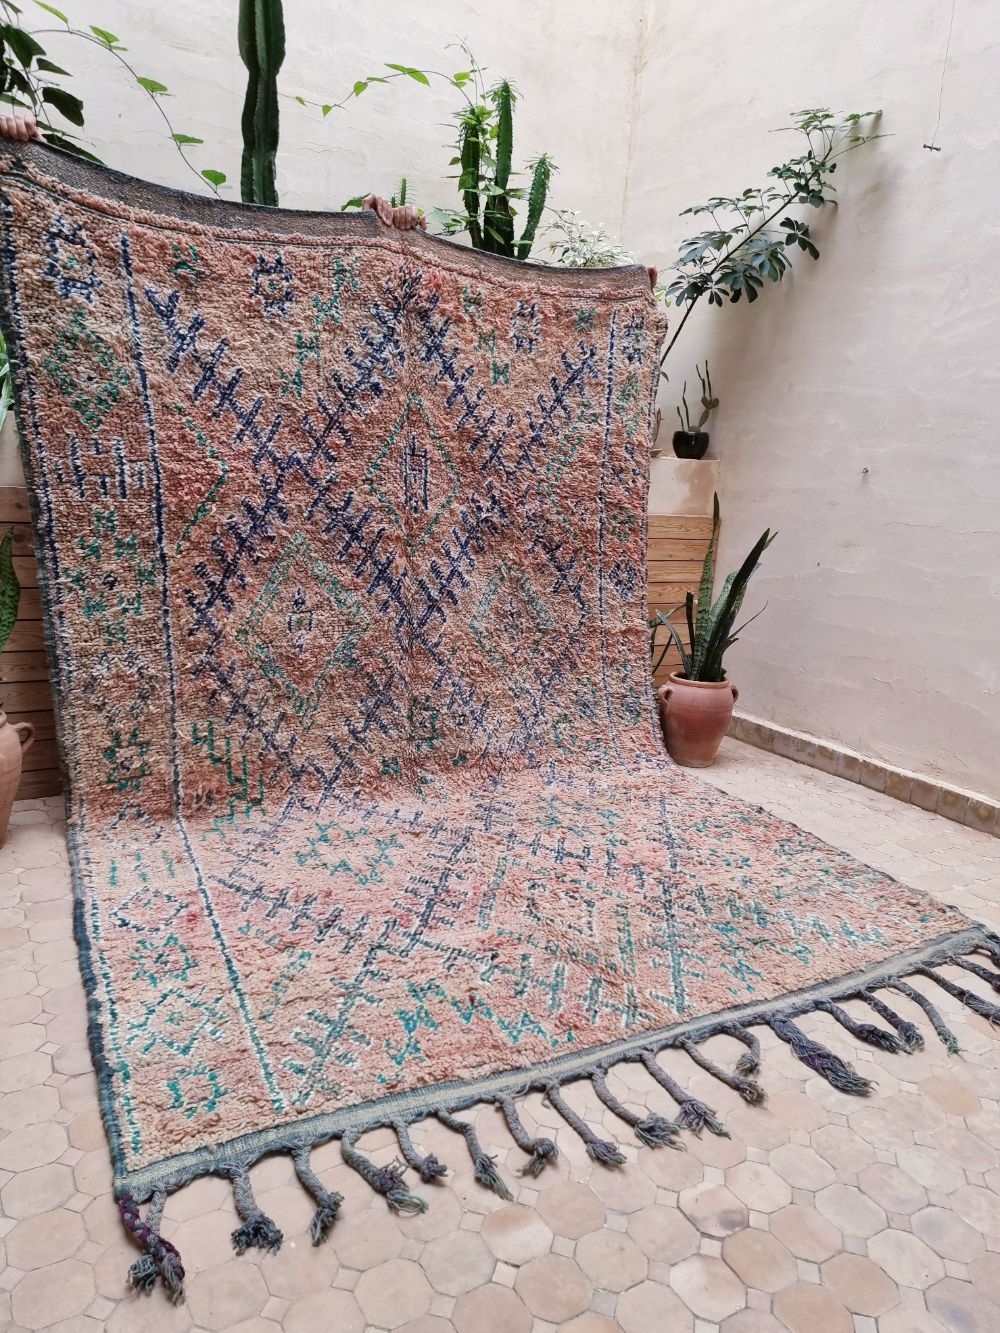 Moroccan Vintage Zayane Rug 300x200cm